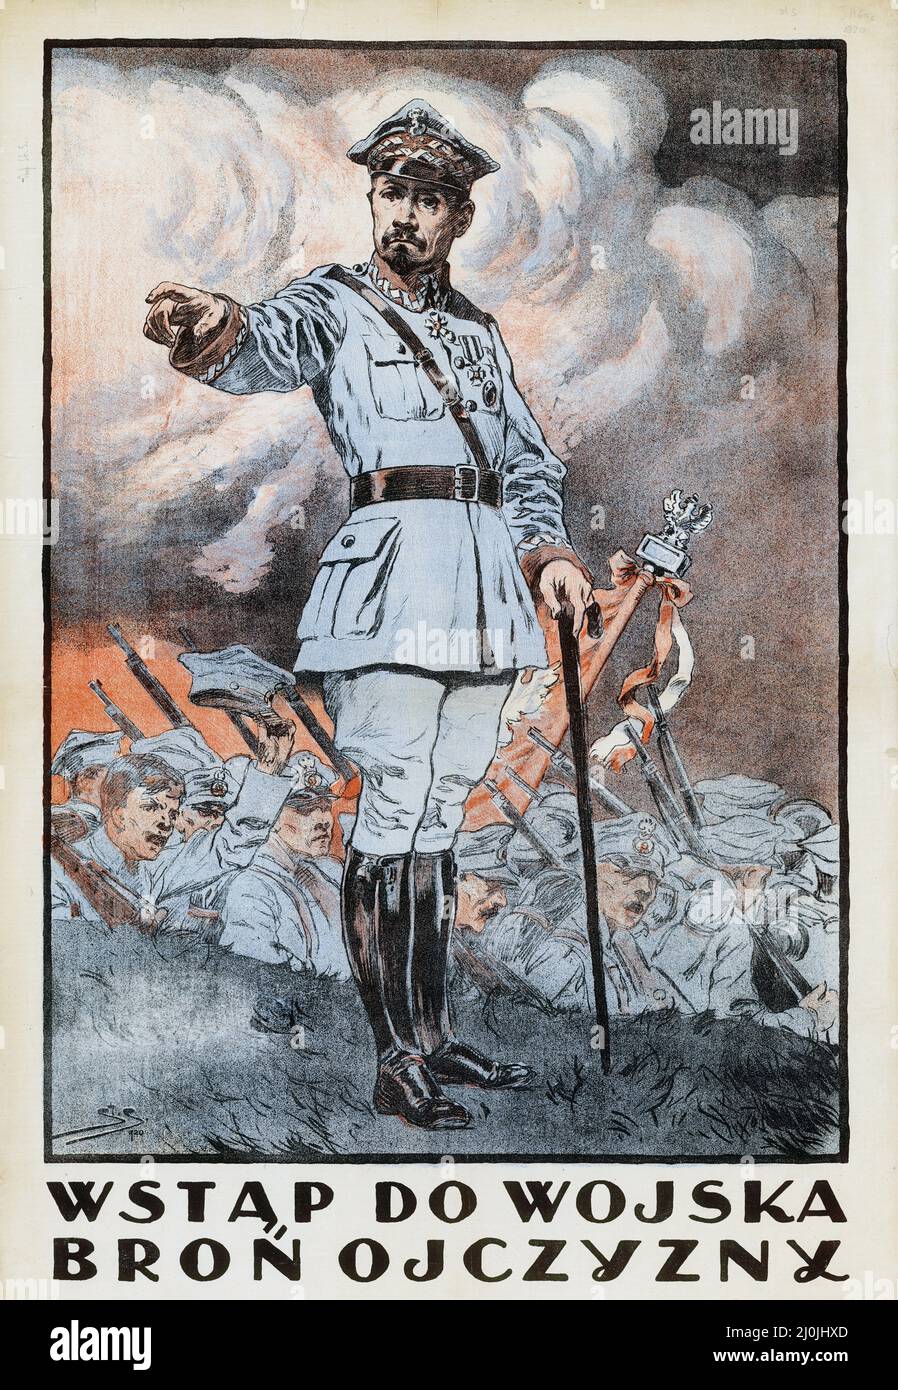 Polish propaganda - Józef Haller von Hallenburg plakat 1920. Propaganda poster from Polish-Soviet War. Art by Stanisław Sawiczewski. Stock Photo